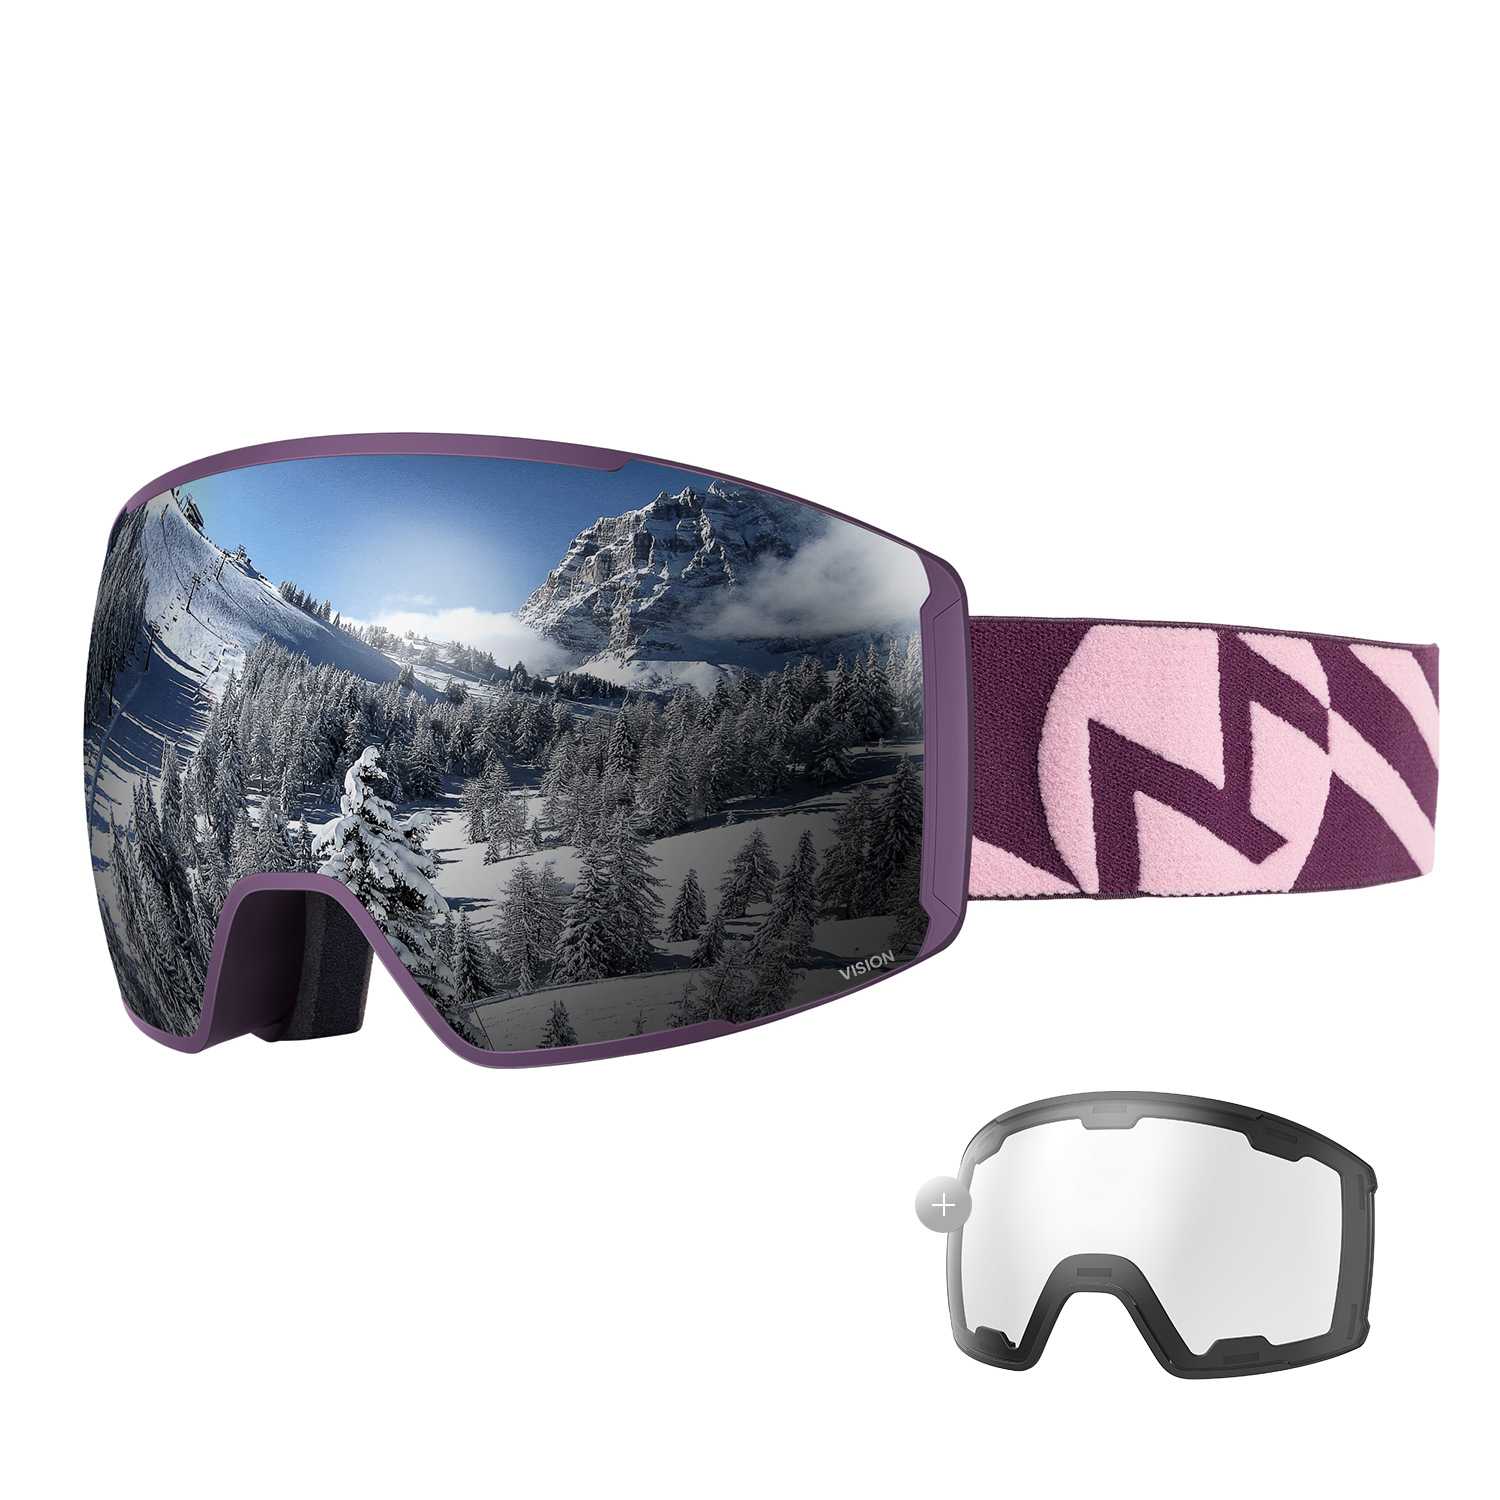 best ski goggles for sunny days